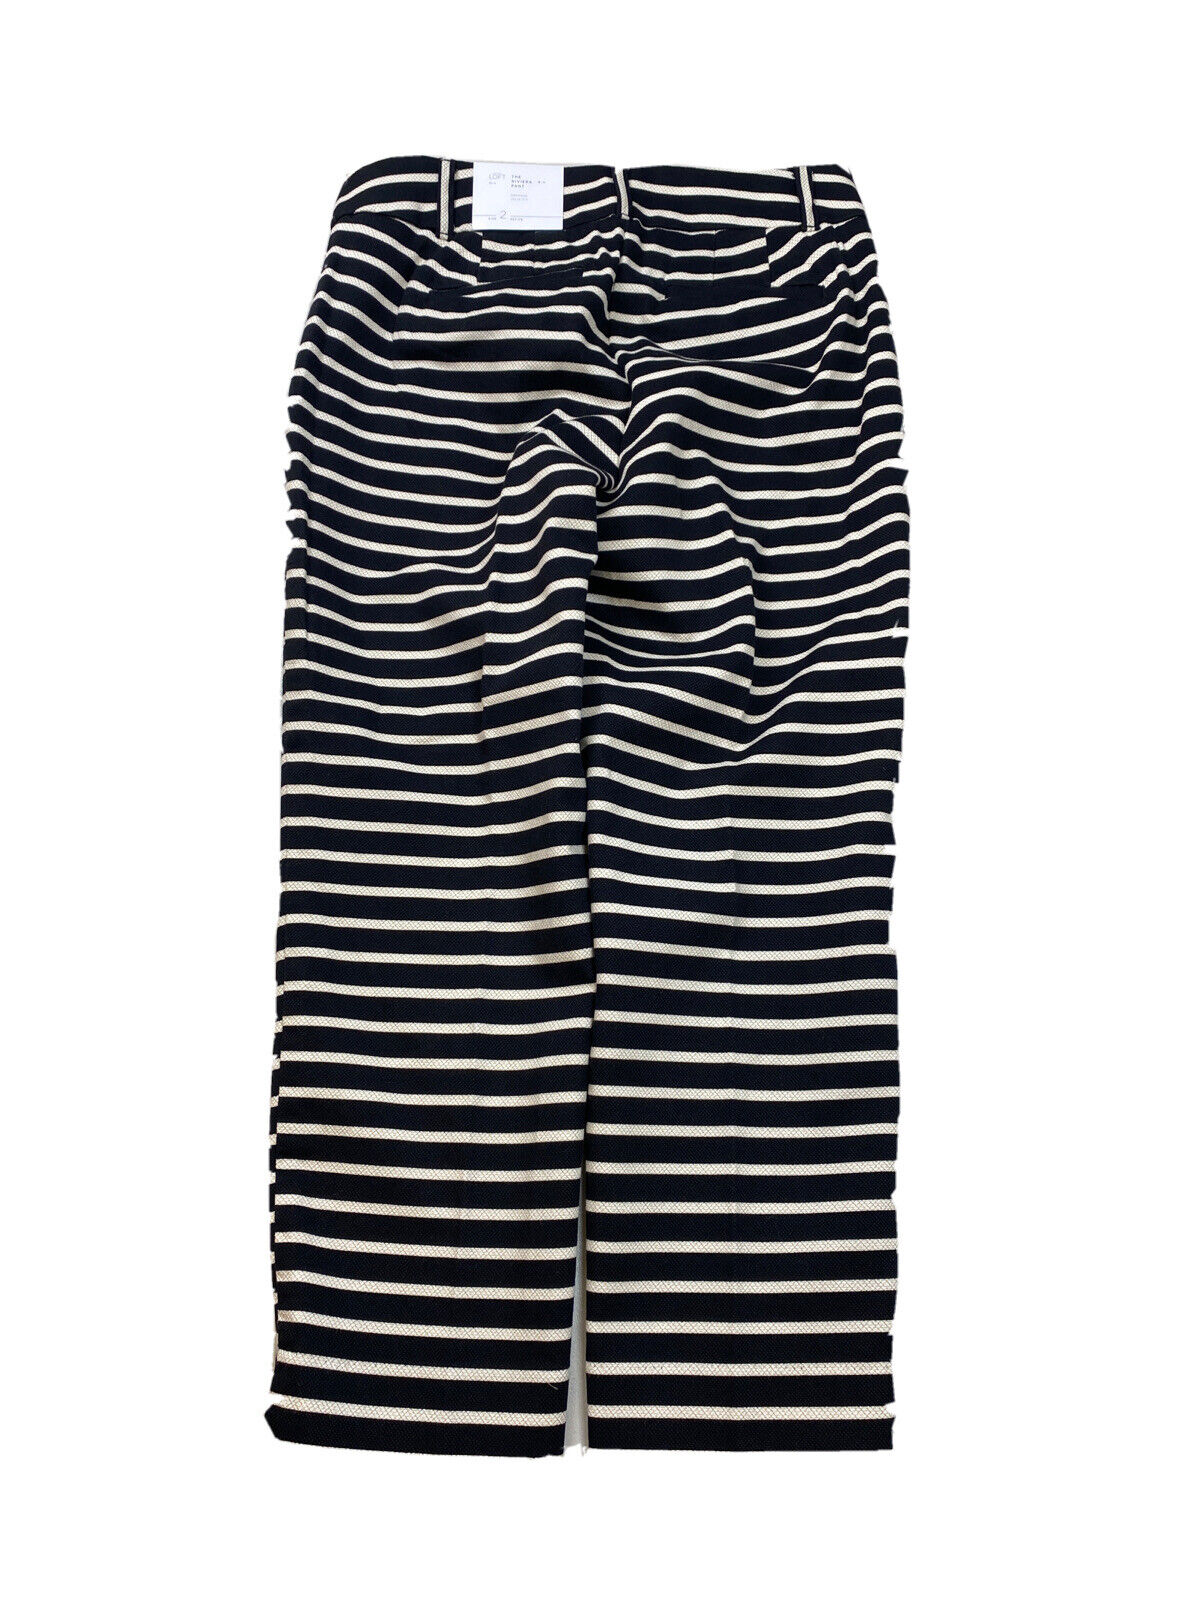 NEW LOFT Women's Black/Ivory Striped Riviera Cropped Julie Pants Petite 2